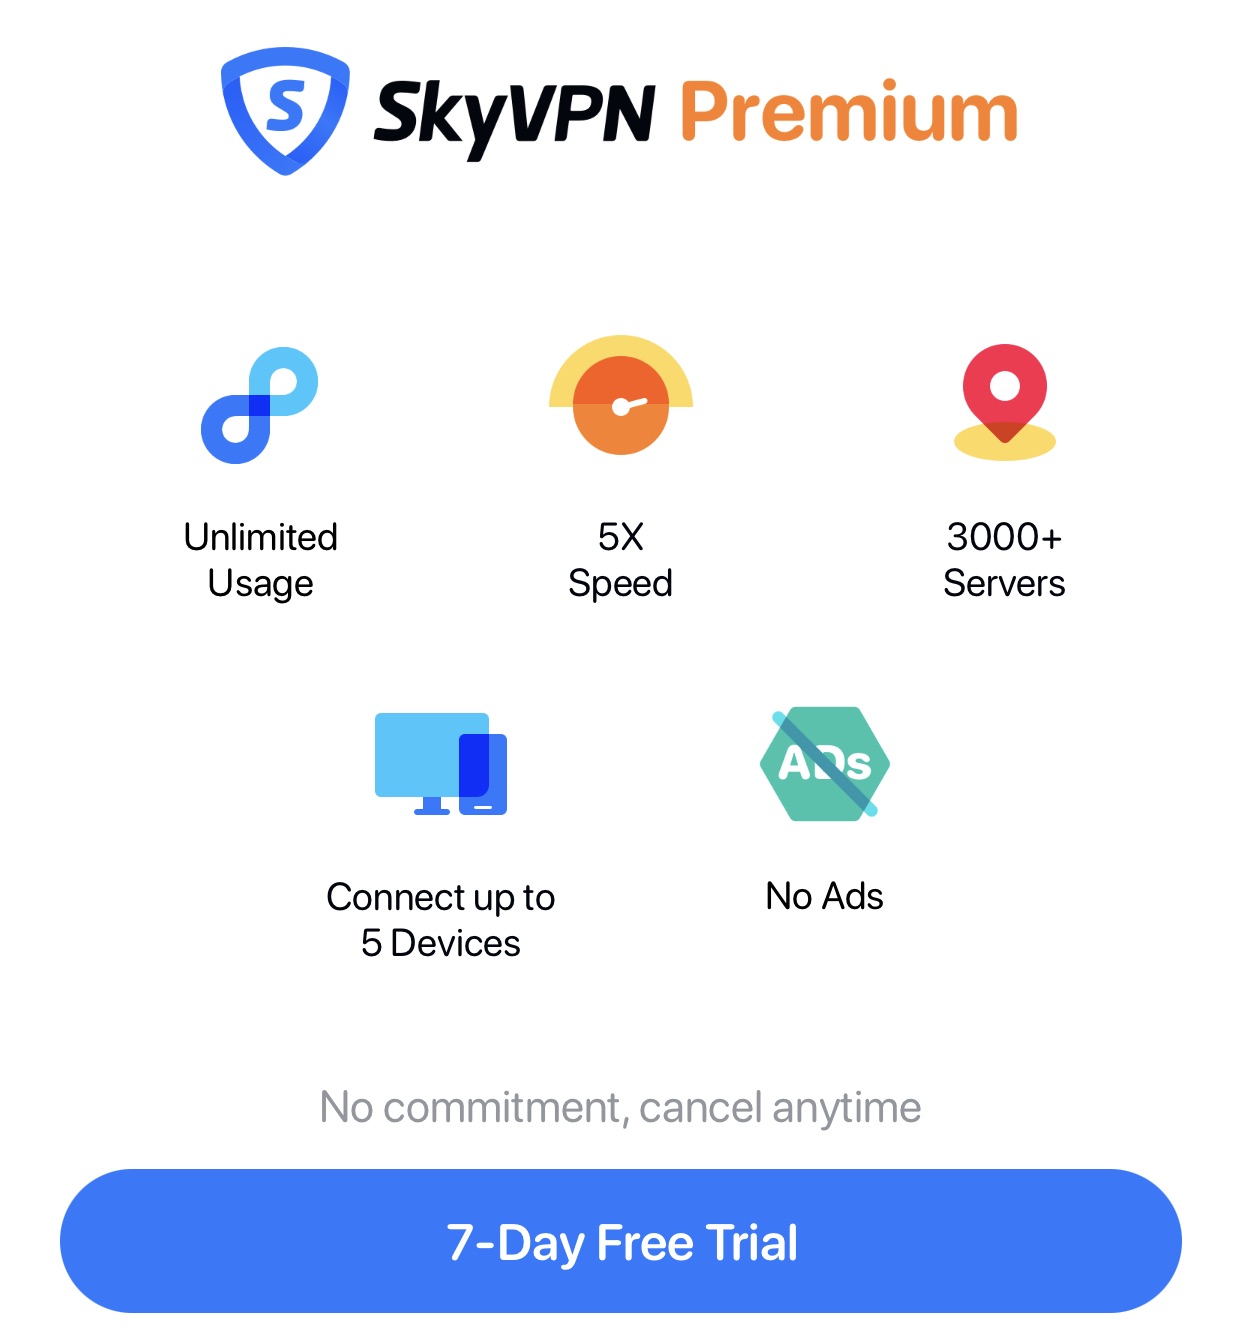 skyvpn premium service